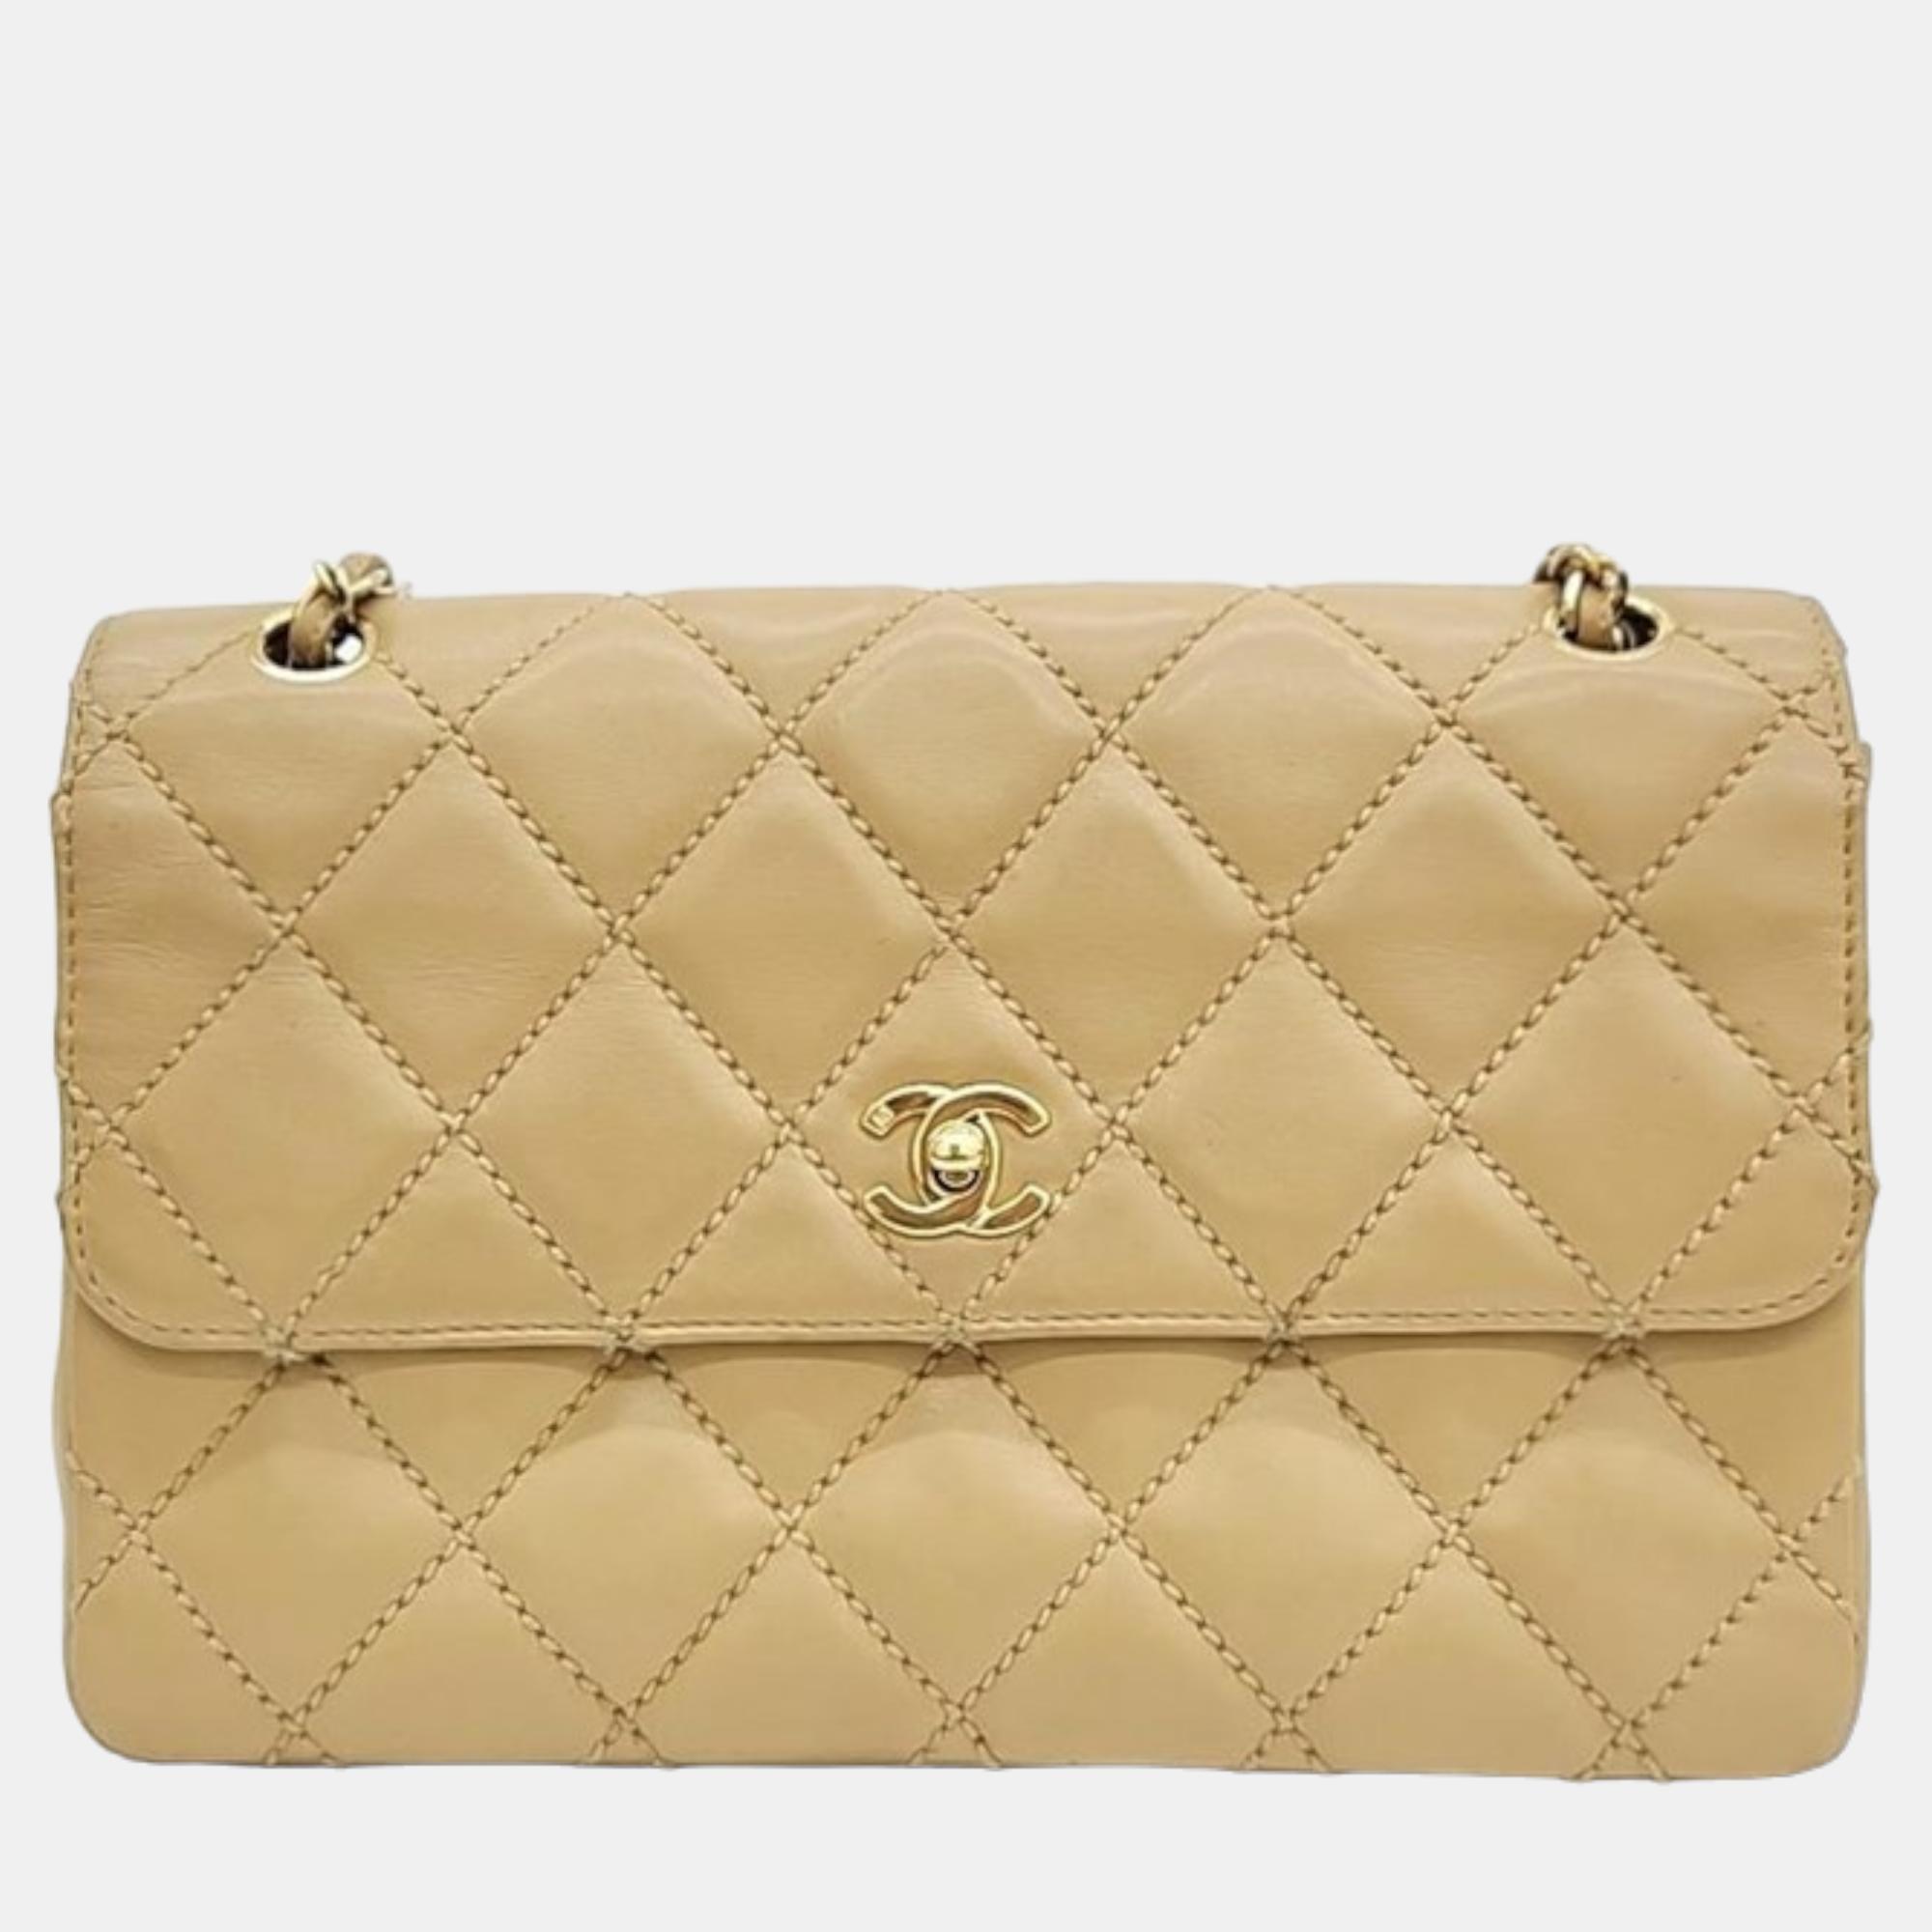 Chanel Beige Leather Medium Wild Stitch Flap Bag